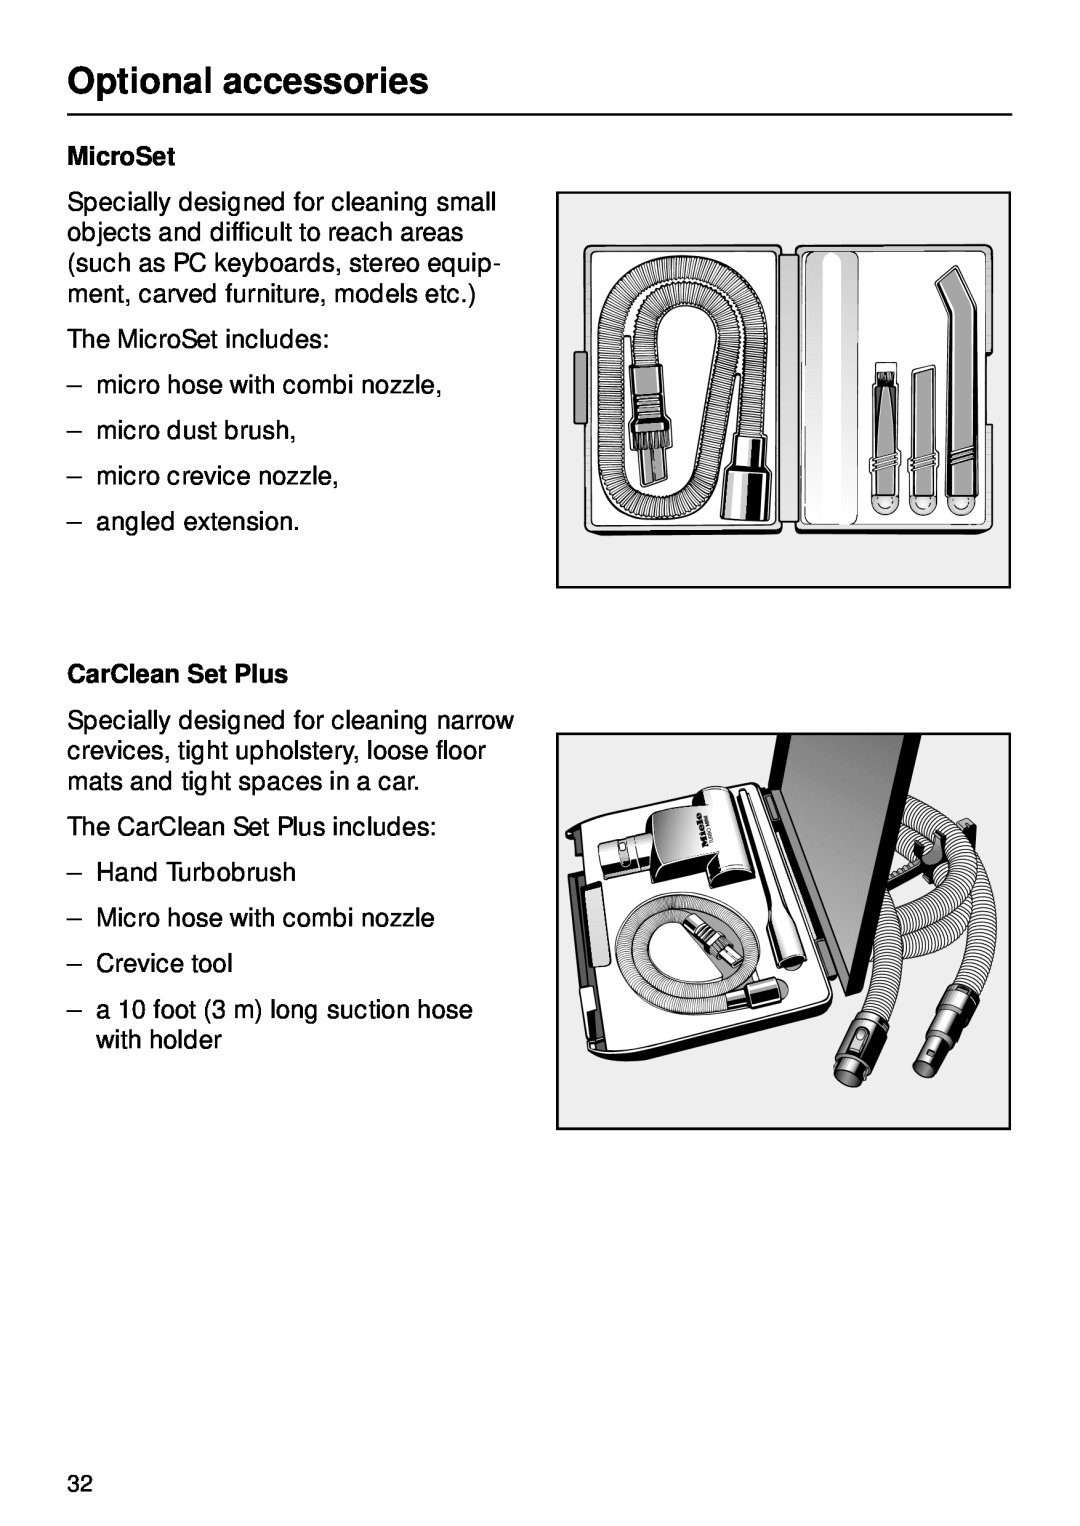 Miele S 252i, S 246i manual MicroSet, CarClean Set Plus, Optional accessories 